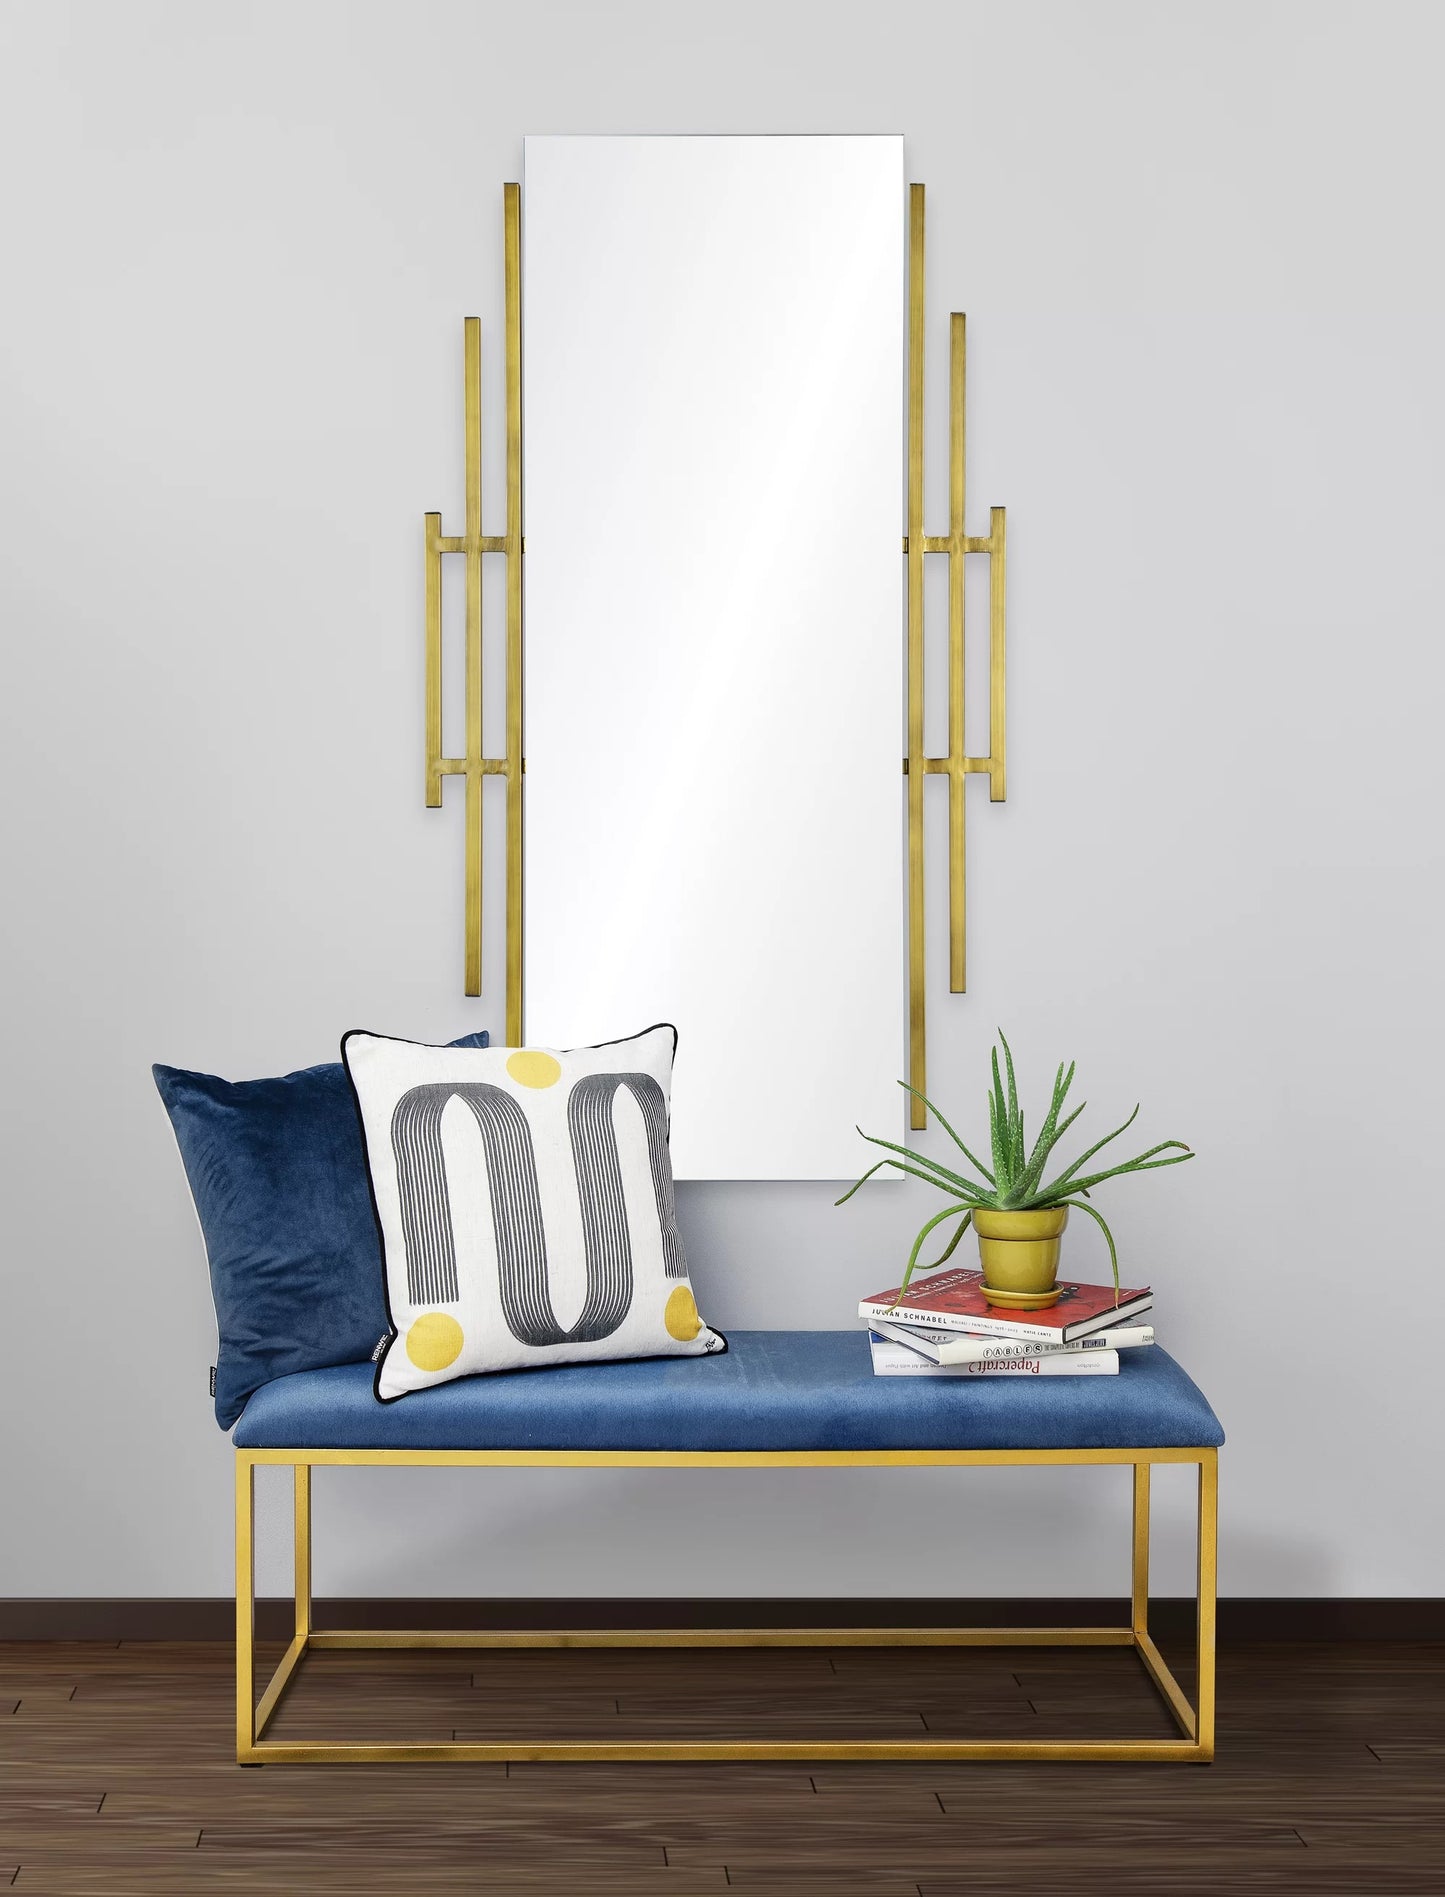 Designer Full Length Wall Mirror with Side Frame